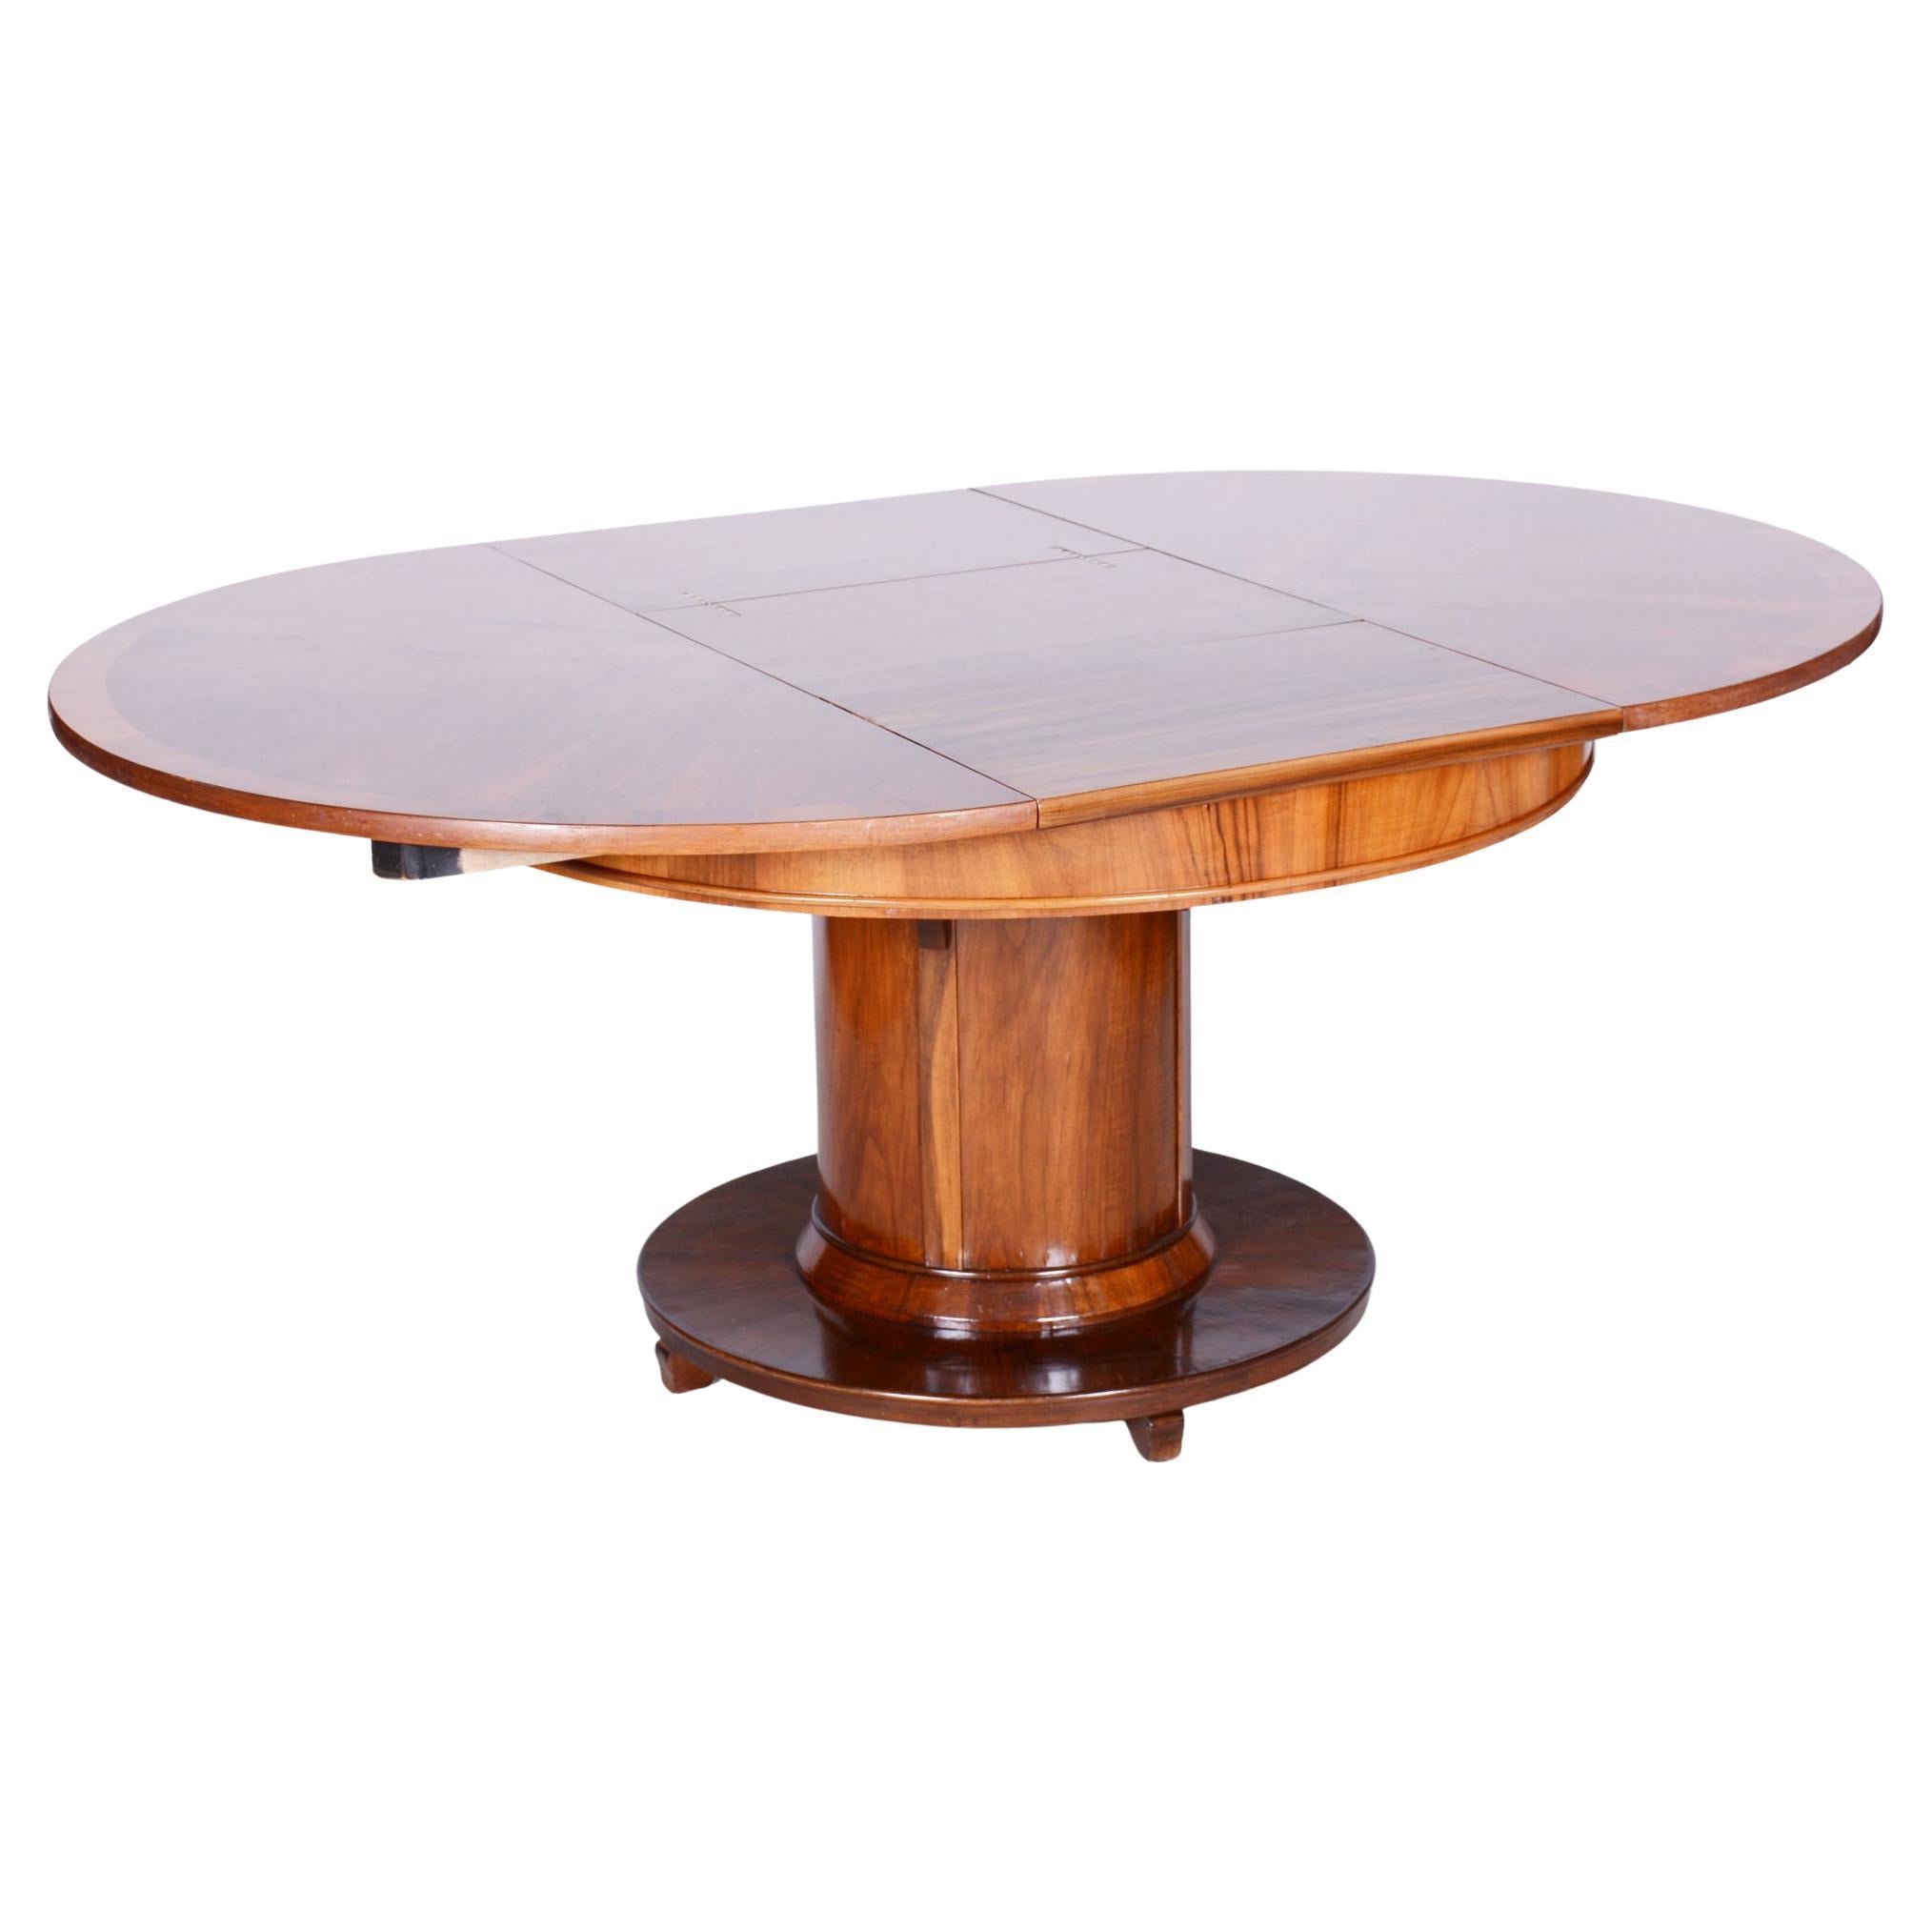 Restored Art Deco Folding Dining Table, Walnut, Spruce, Czech, 1920s For Sale